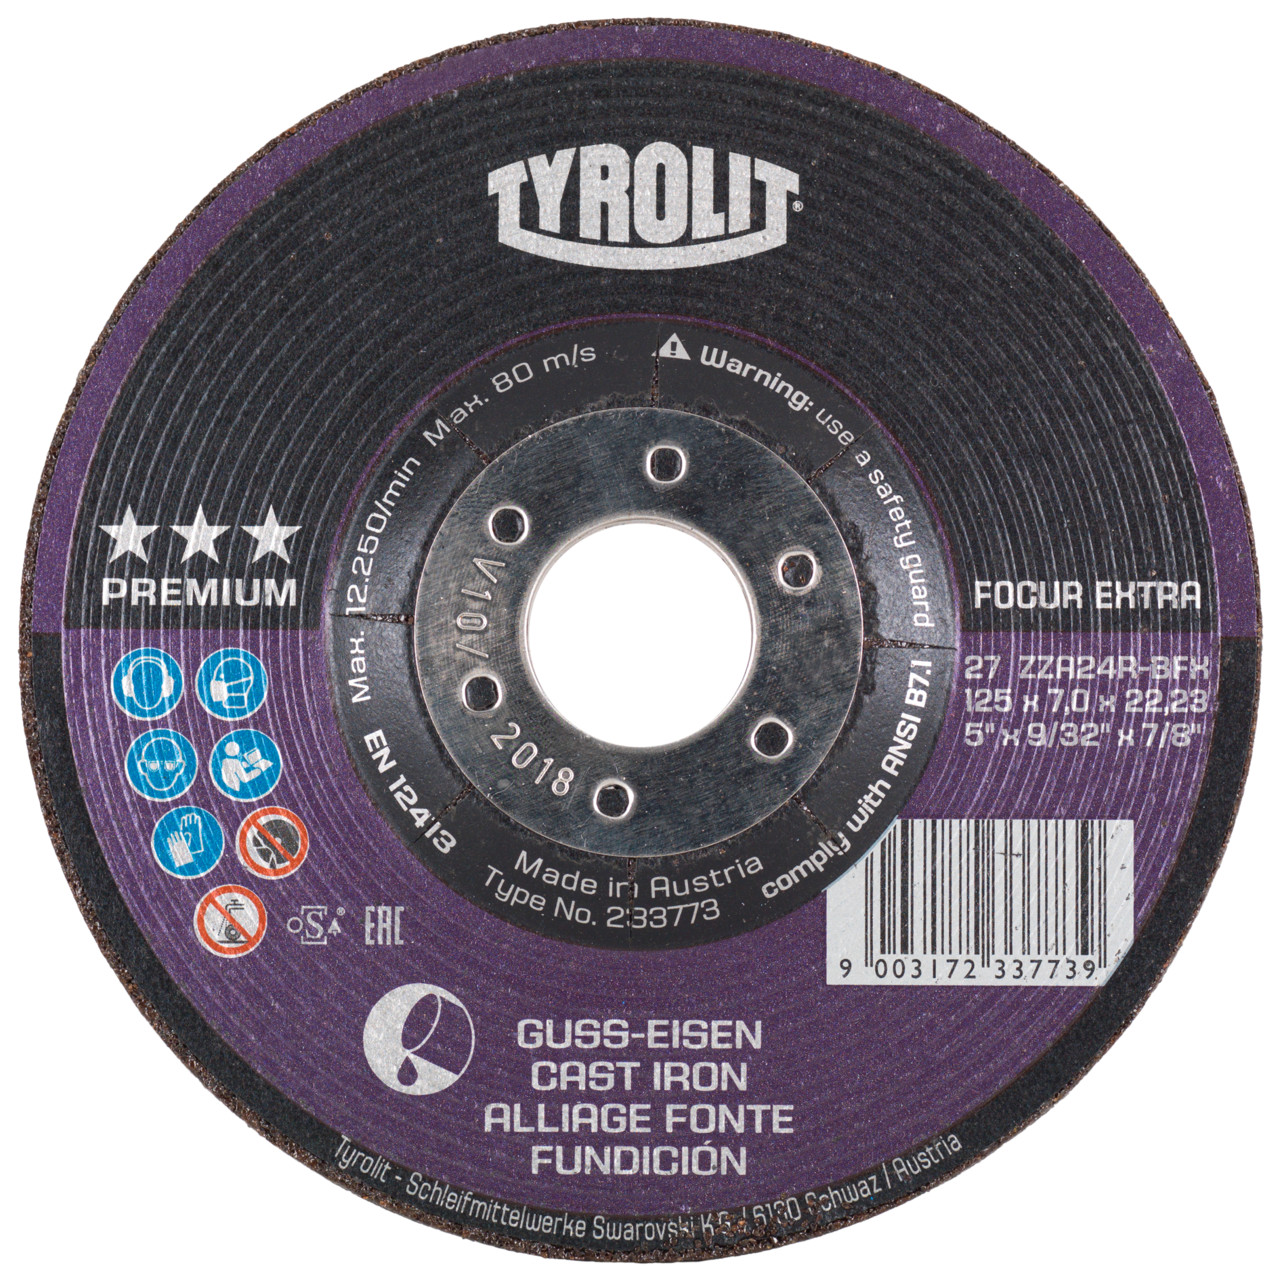 Tyrolit Roughing disc DxUxH 230x7x22.23 FOCUR Extra for cast iron, shape: 27 - offset version, Art. 233762